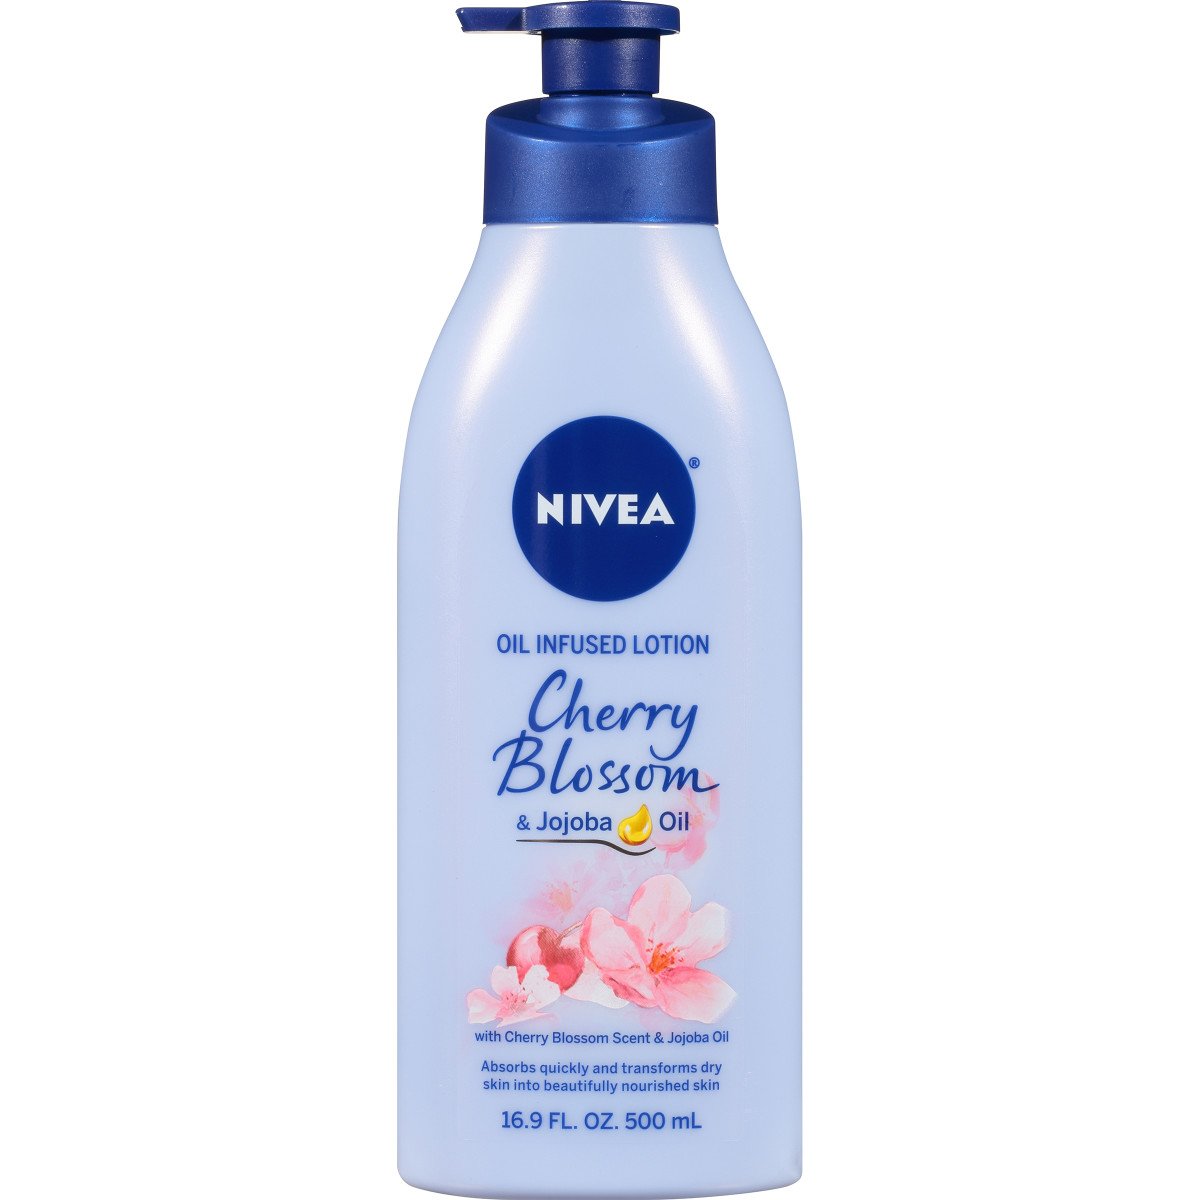 NIVEA Oil Infused Body Cherry Blossom and Jojoba Oil - Shop Bath Skin Care H-E-B